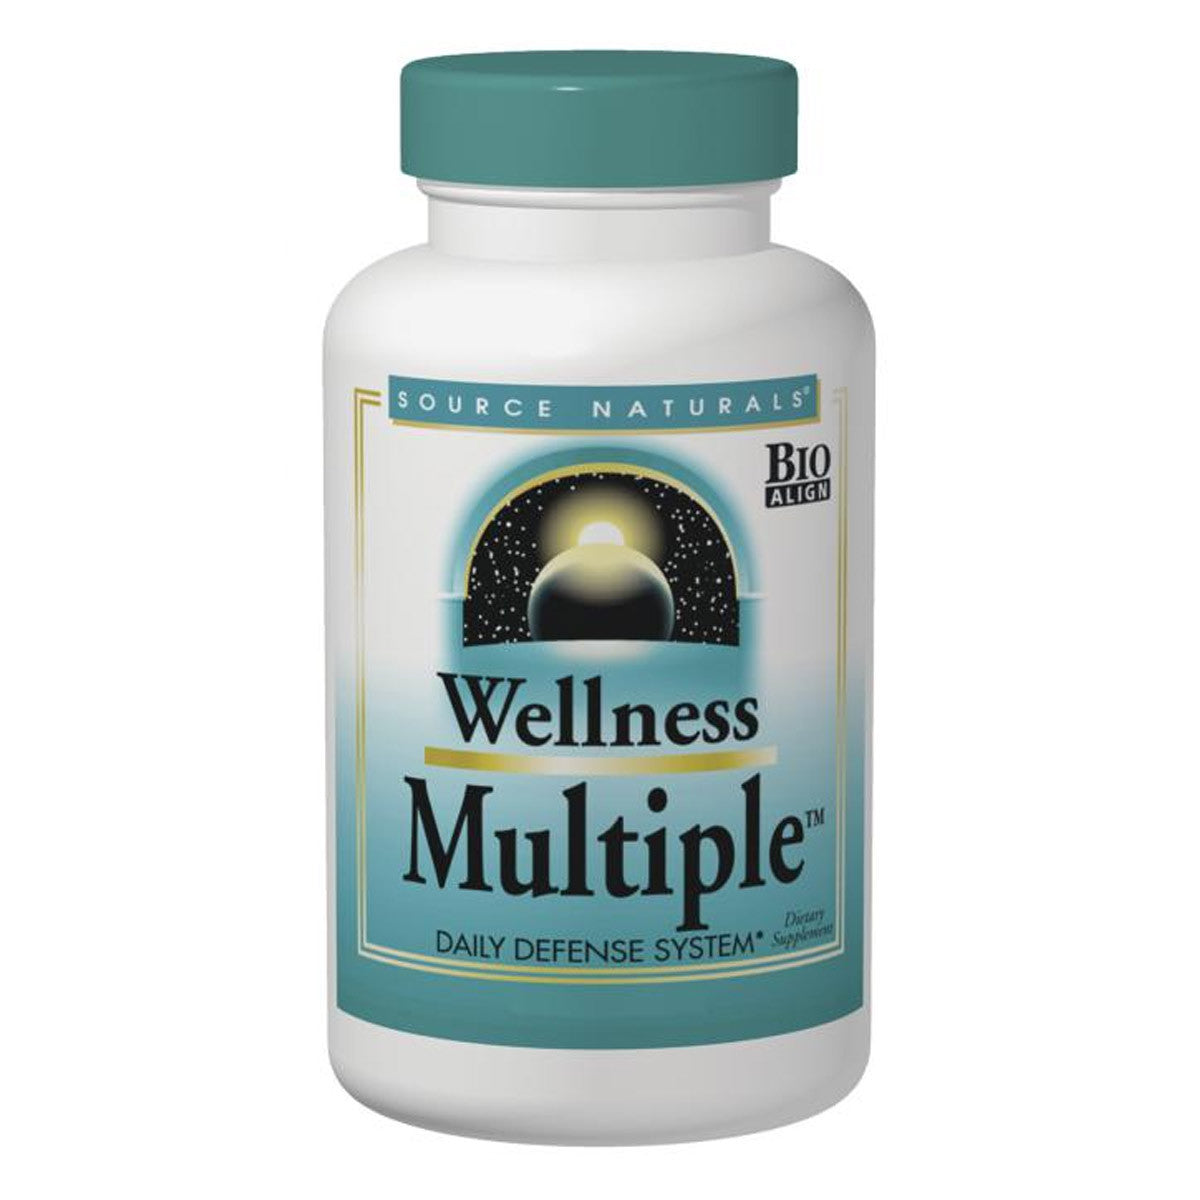 Primary image of Wellness Multiple